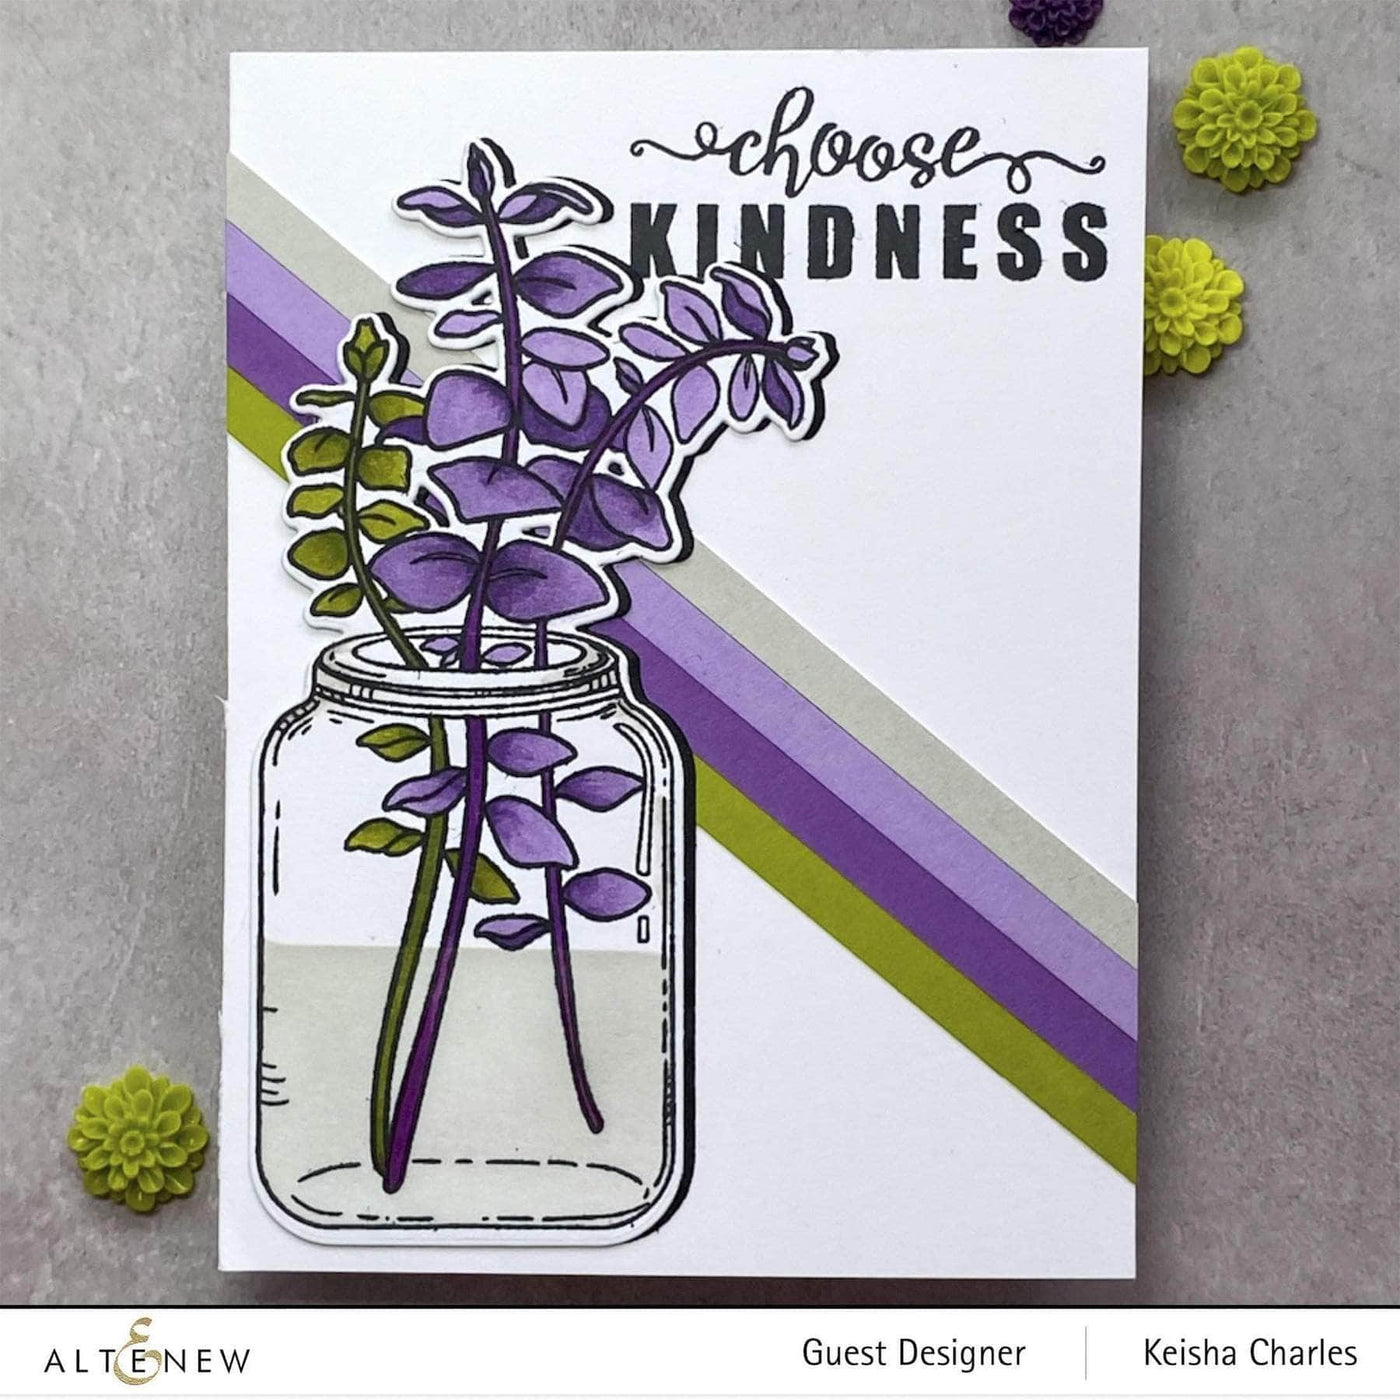 Altenew Creativity Kit Bundle Sketched Jar Creativity Cardmaking Kit